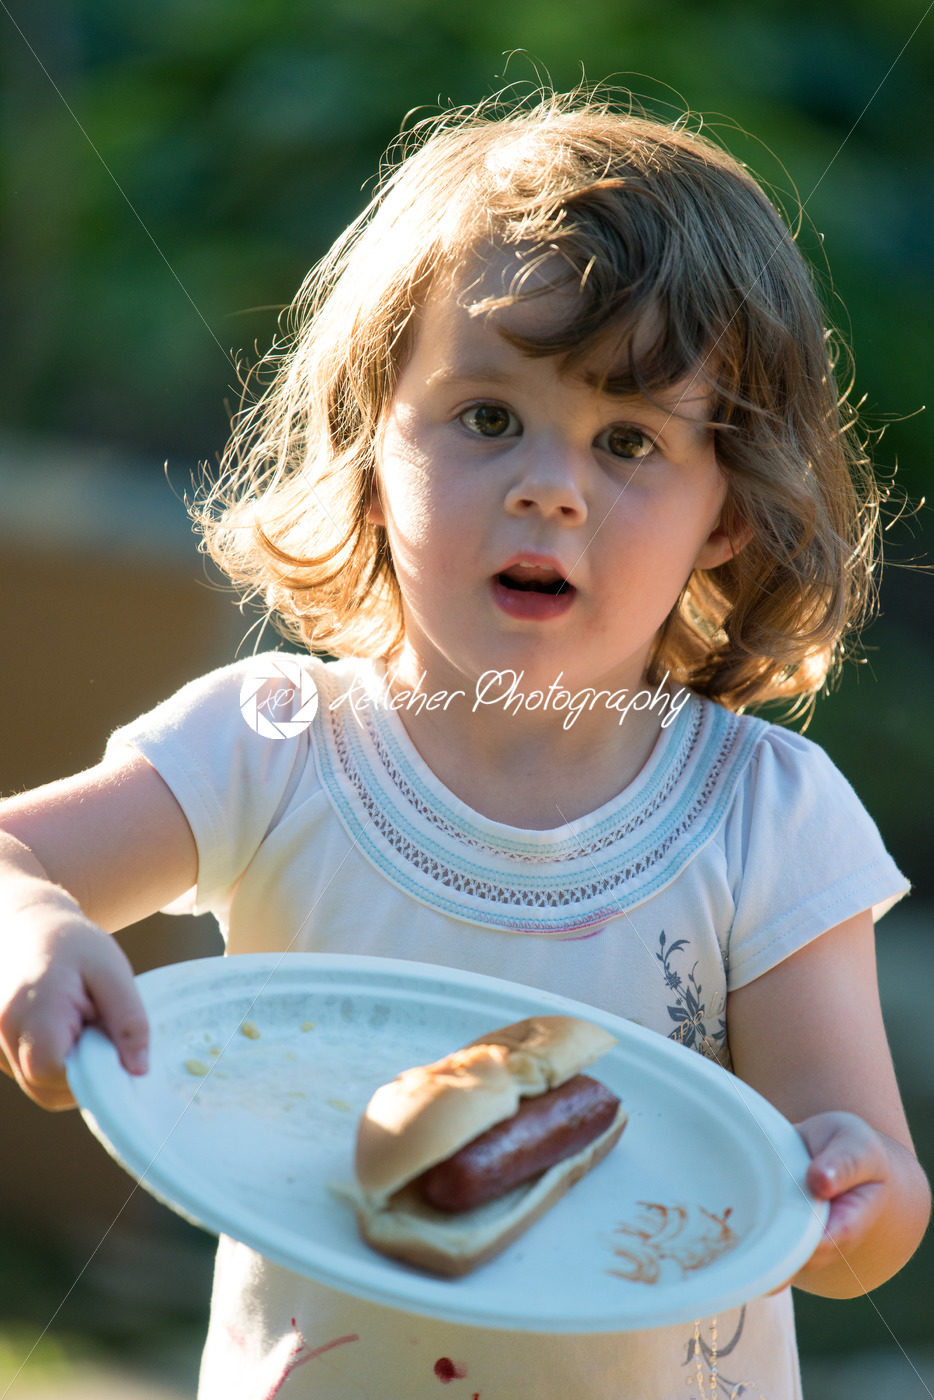 Cute toddler girl eating hot dog hotdog - Kelleher Photography Store